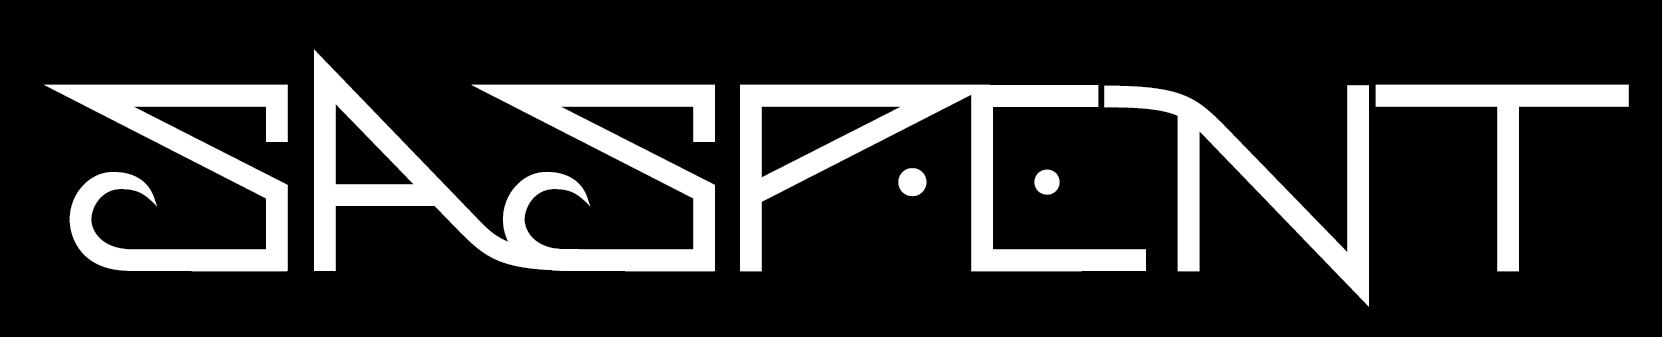 Saspent logo